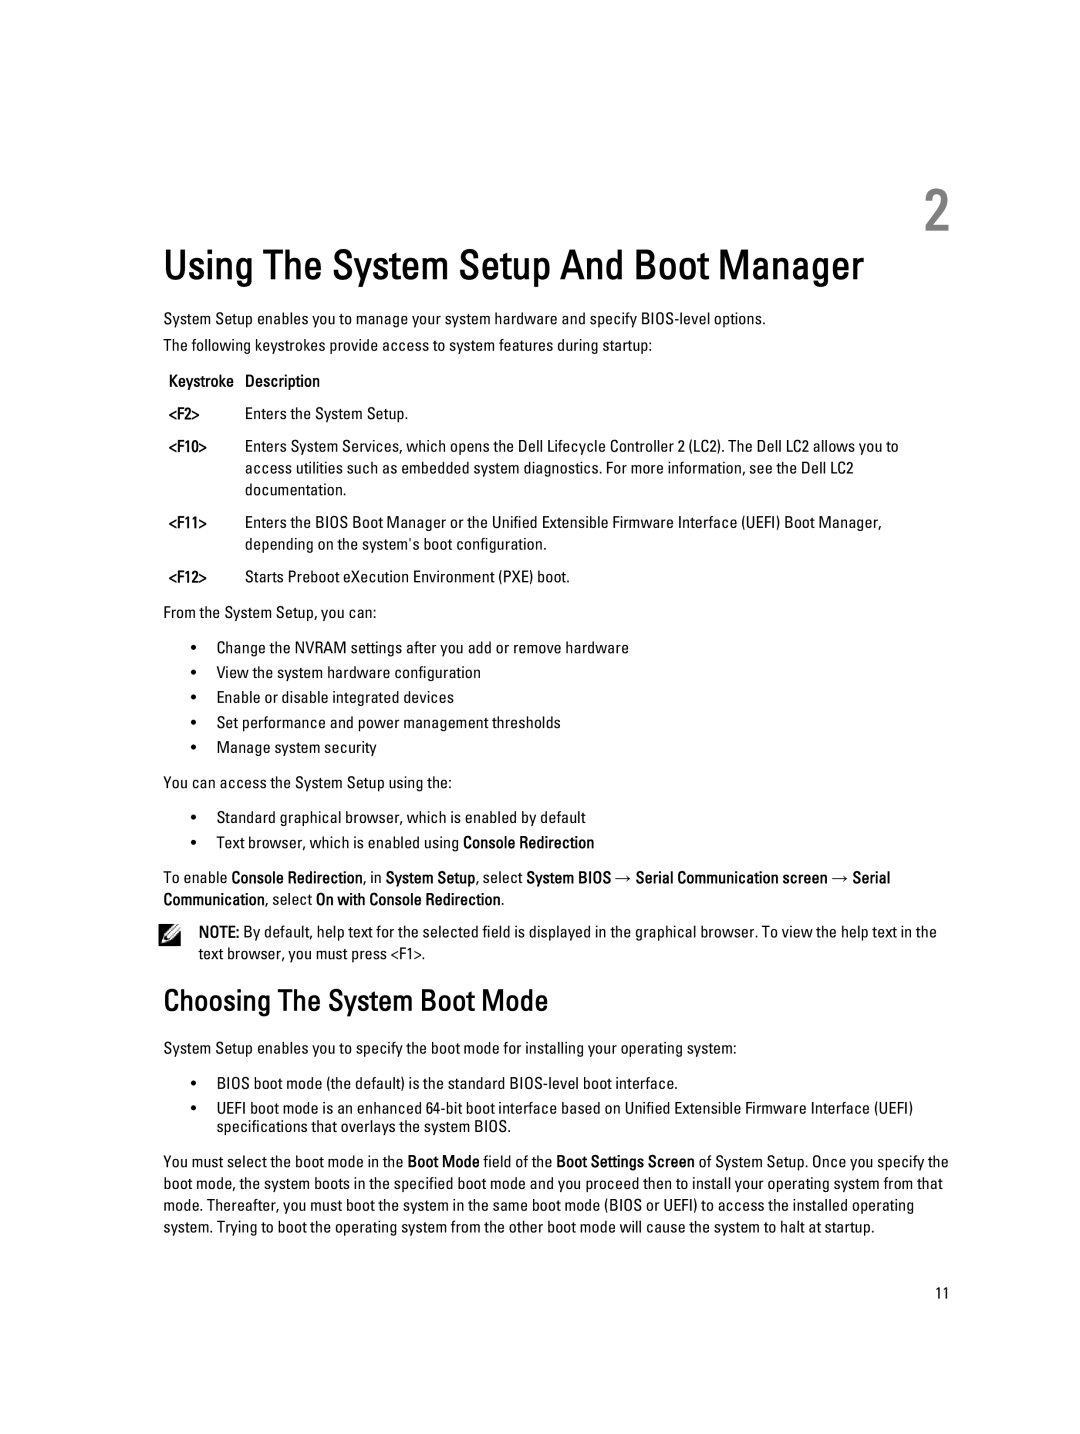 Dell QHB owner manual Choosing The System Boot Mode, Keystroke Description 